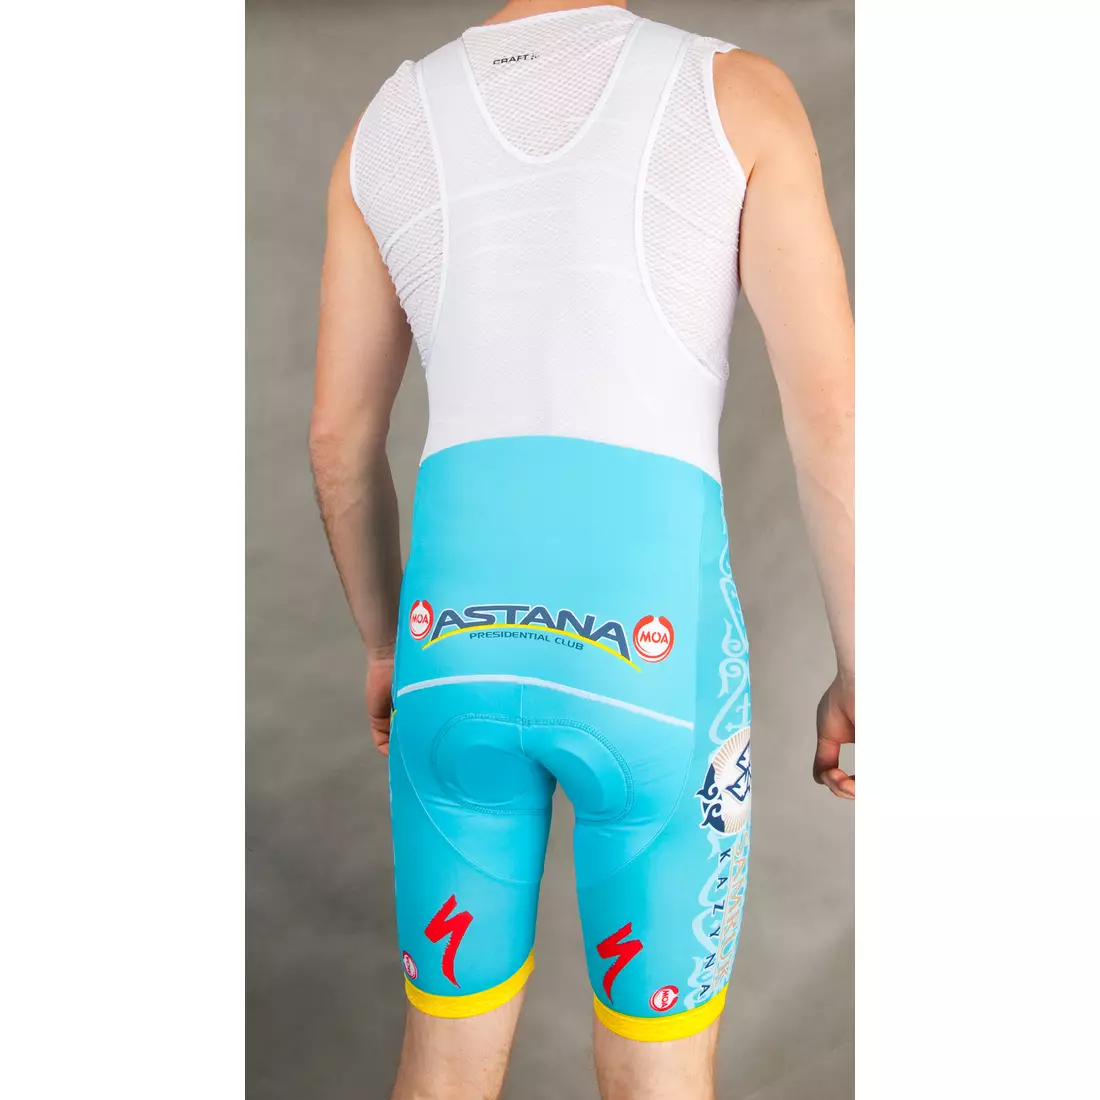 ASTANA 2015 cycling shorts